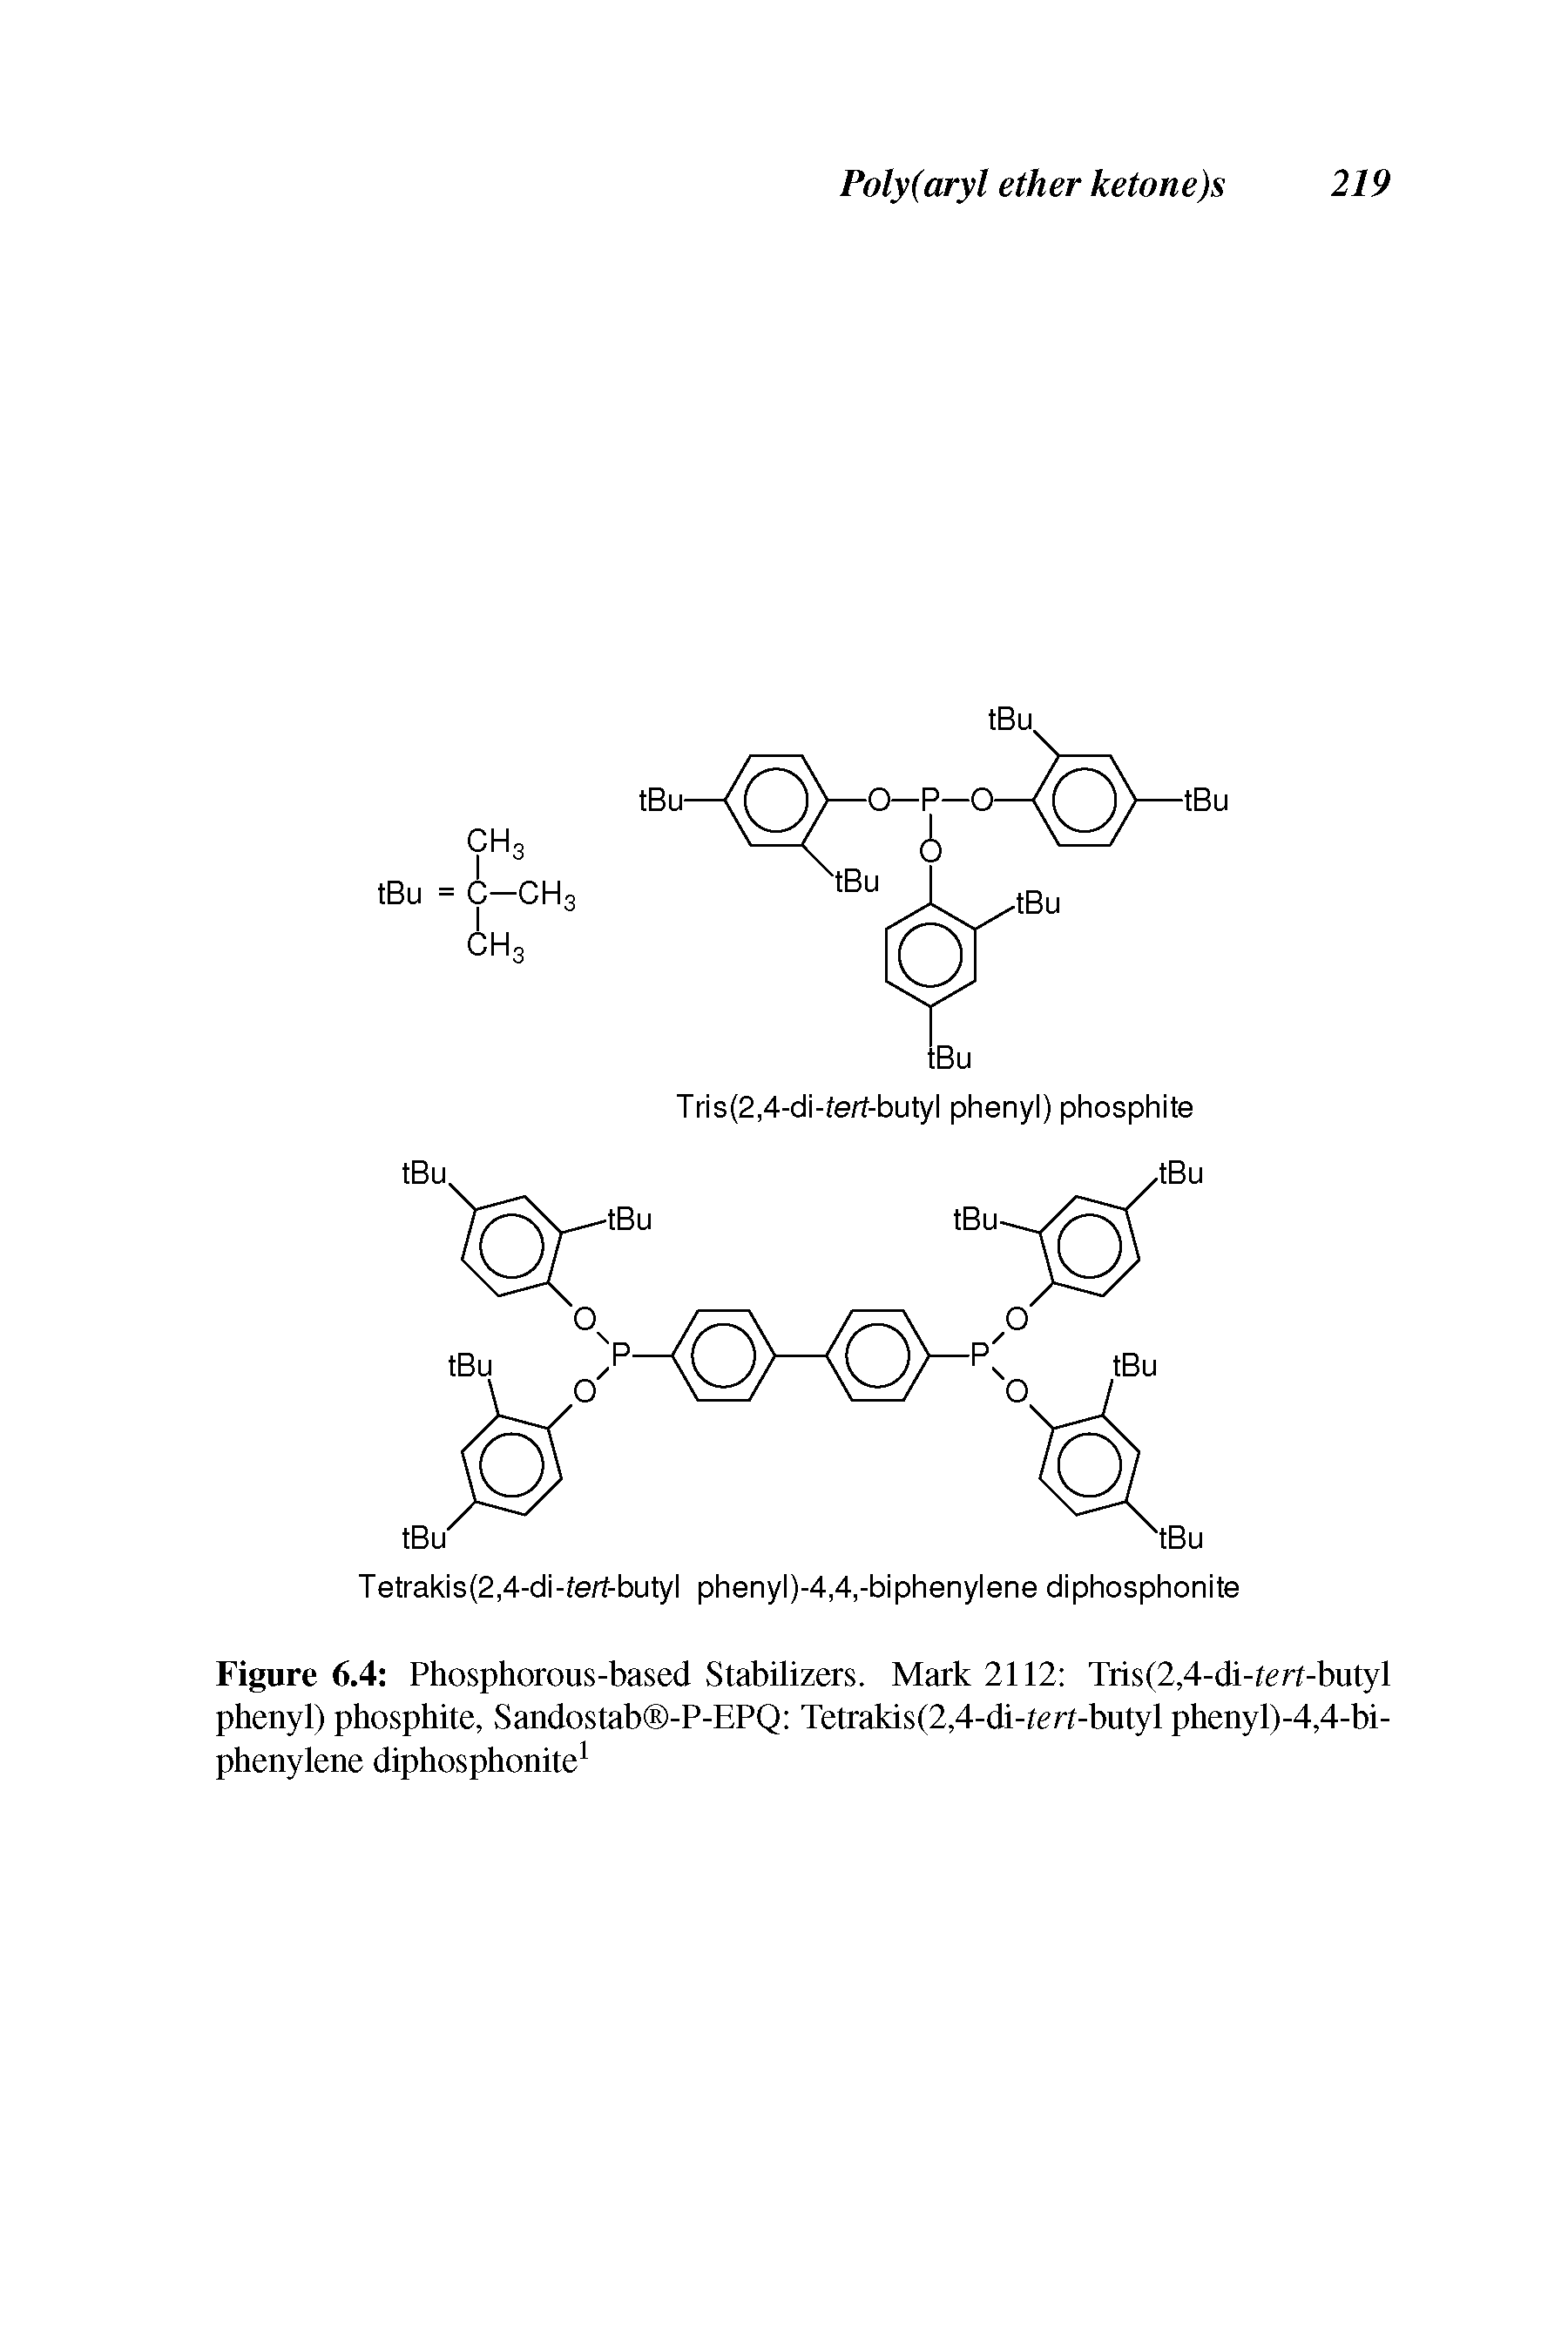 Figure 6.4 Phosphorous-based Stabilizers. Mark 2112 Tris(2,4-di-ferf-butyl phenyl) phosphite, Sandostab -P-EPQ Tetrakis(2,4-di-tert-butyl phenyl)-4,4-bi-phenylene diphosphonite ...